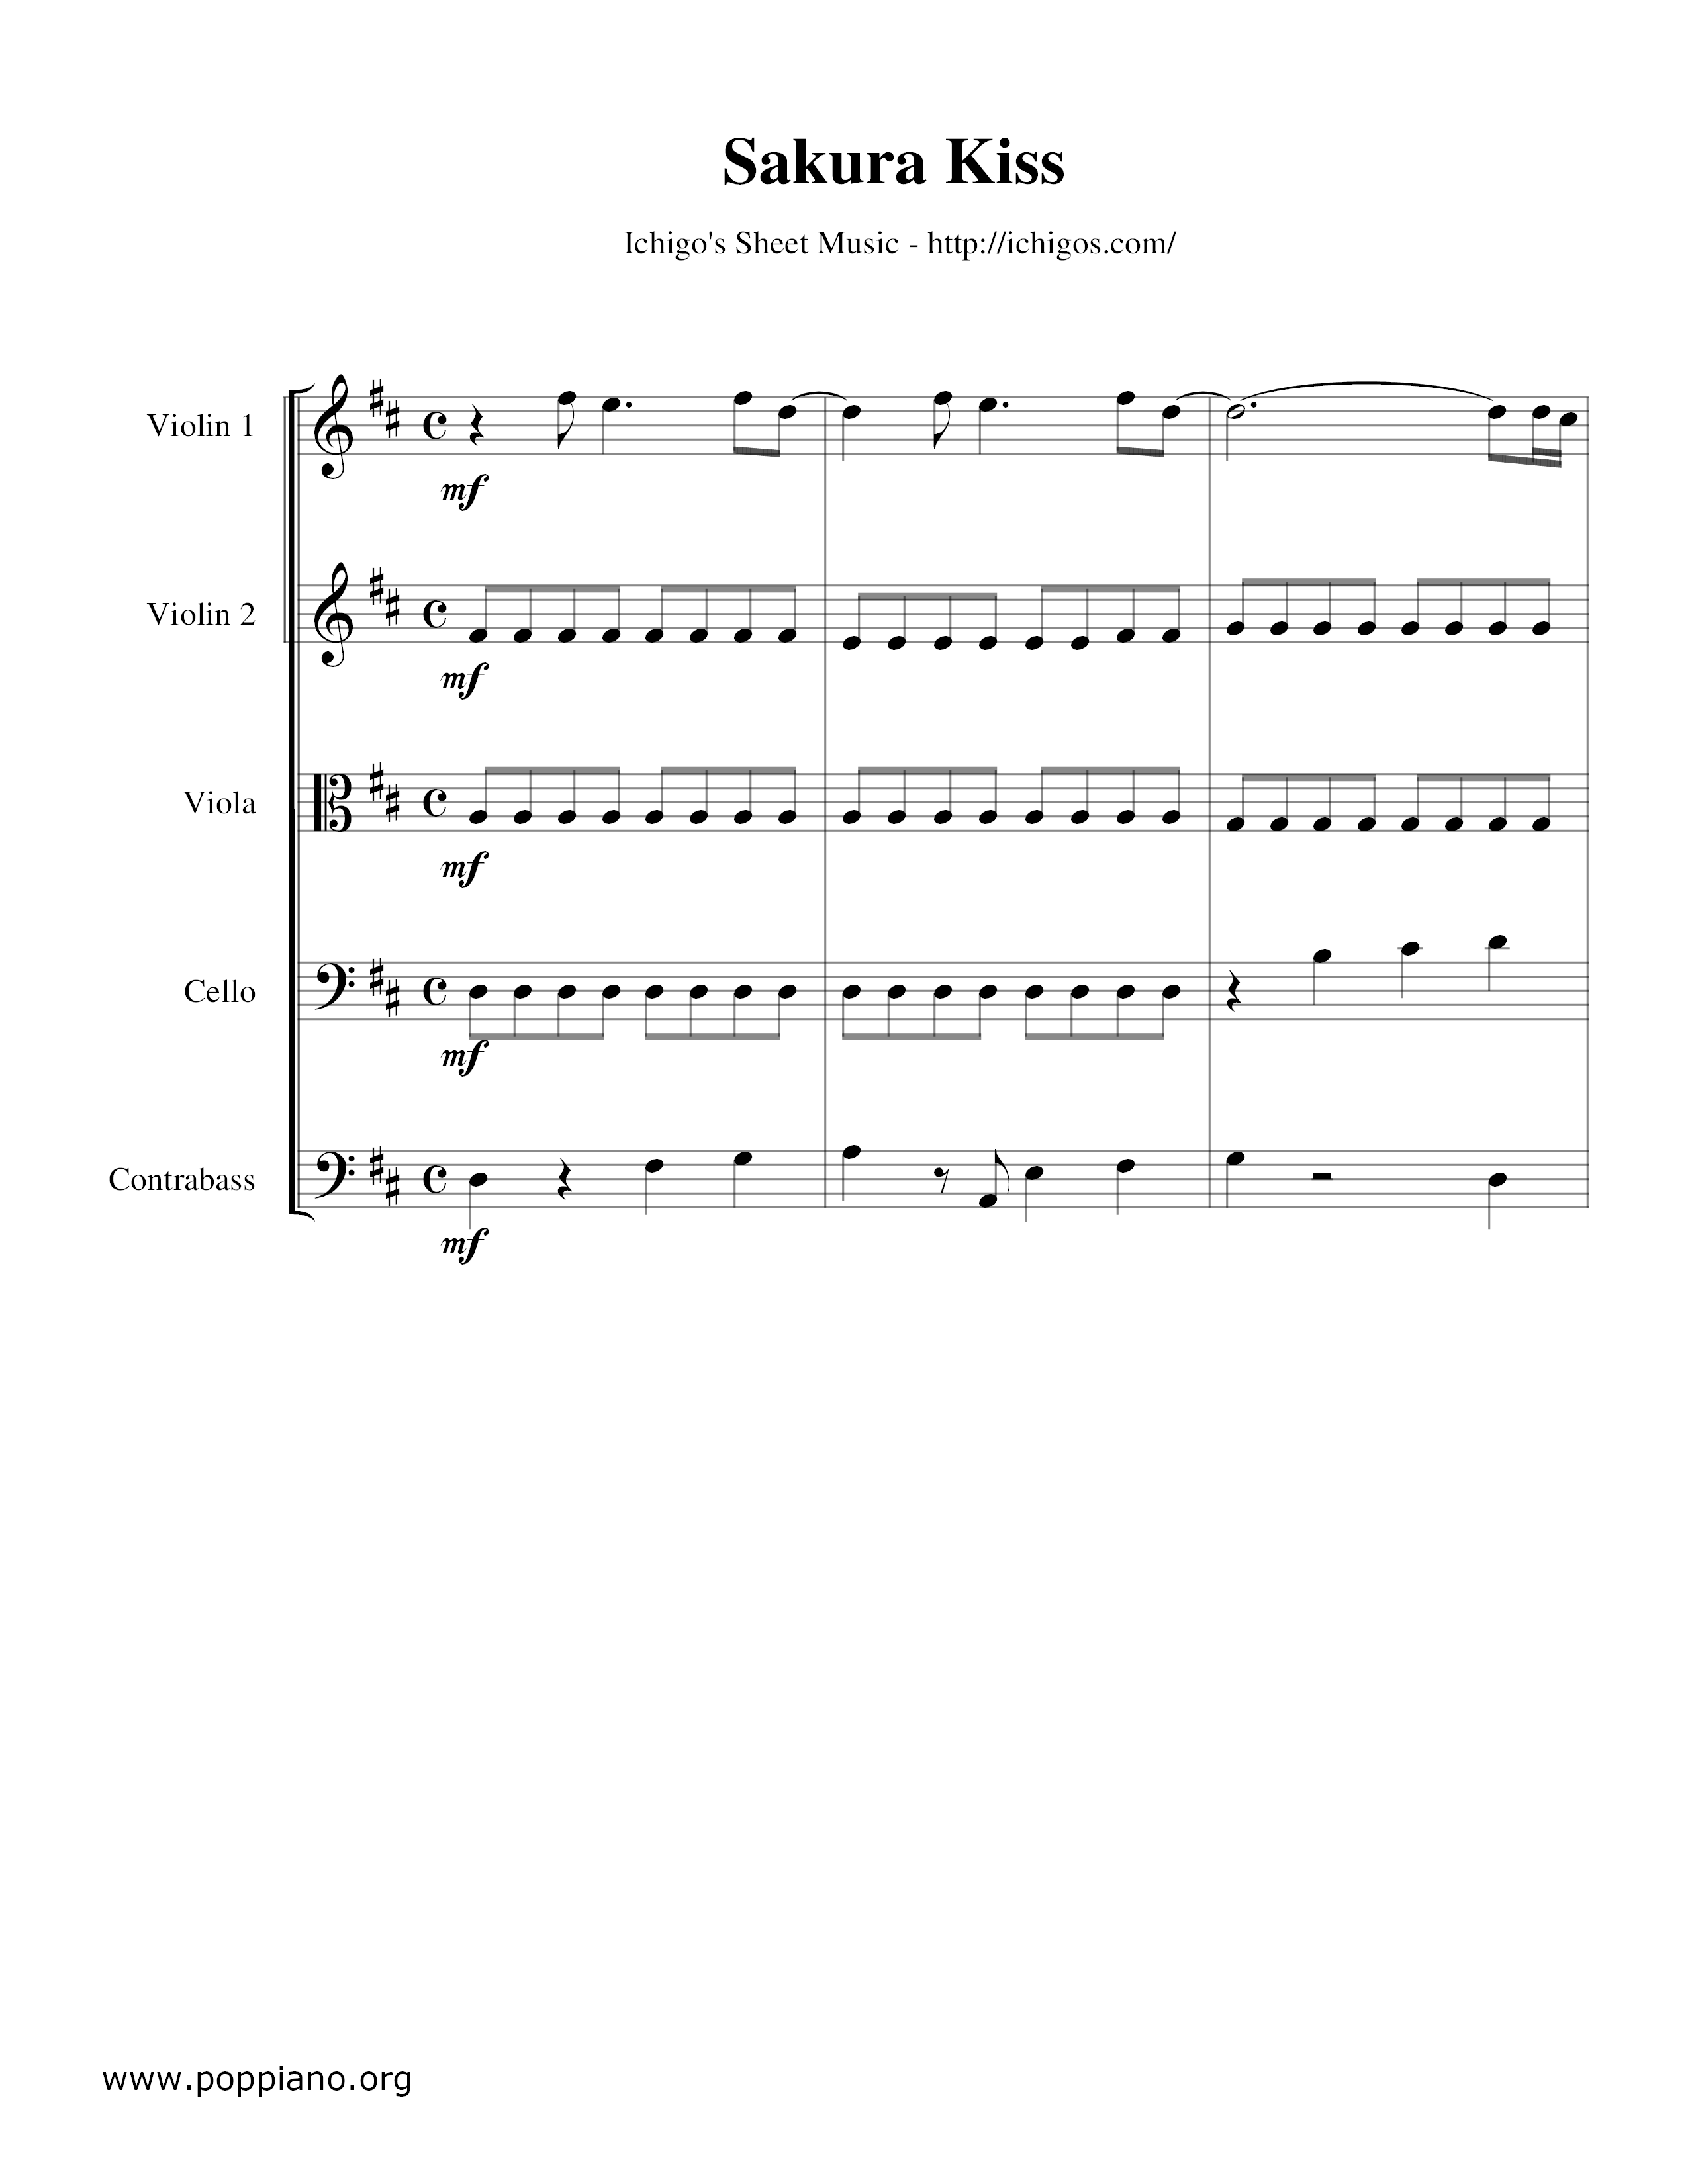 Sakura Kiss Score